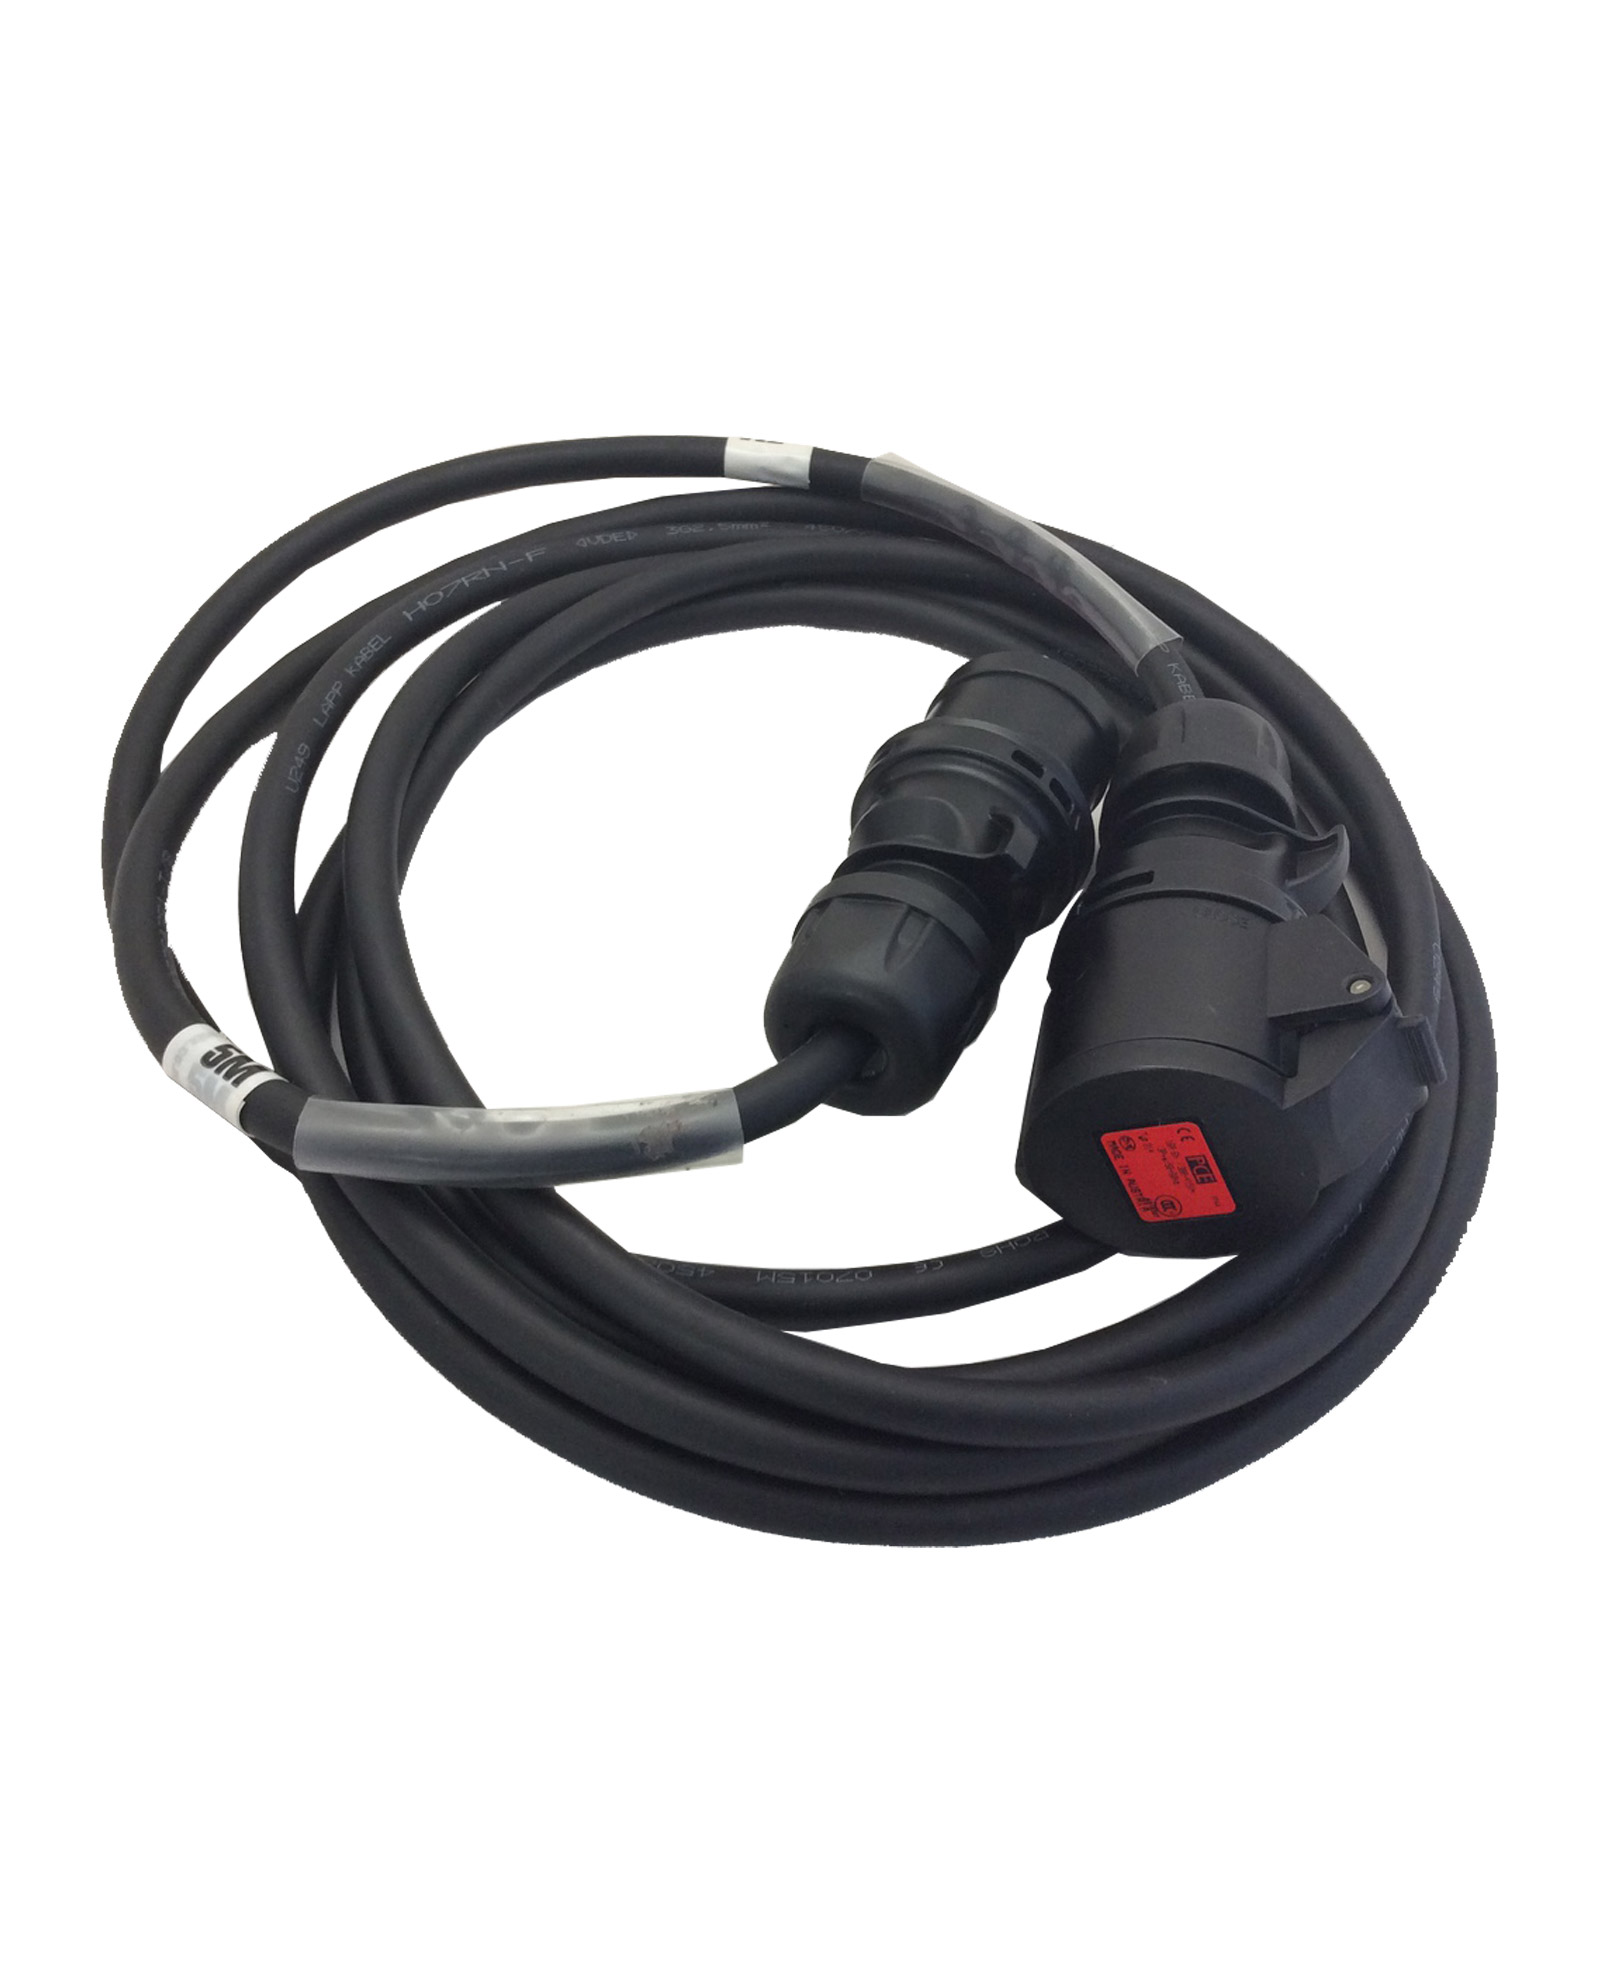 4 Pole Direct Control Motor Control Cable 1.5mm Black Cable & Connectors